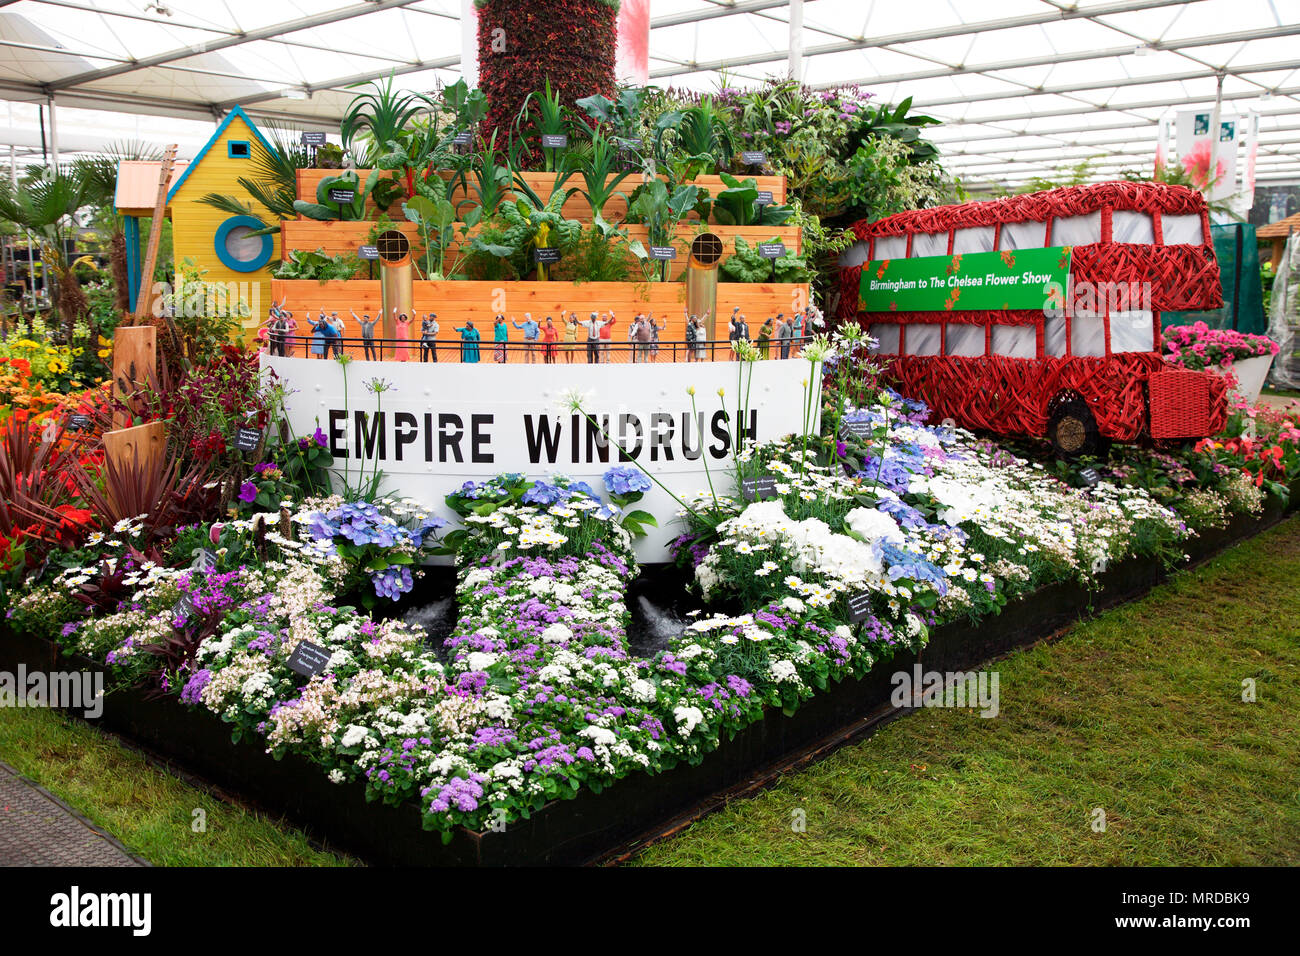 Birmingham City Council’s Windrush exhibit in the Great Pavilion, RHS Chelsea Flower Show 2018 Stock Photo